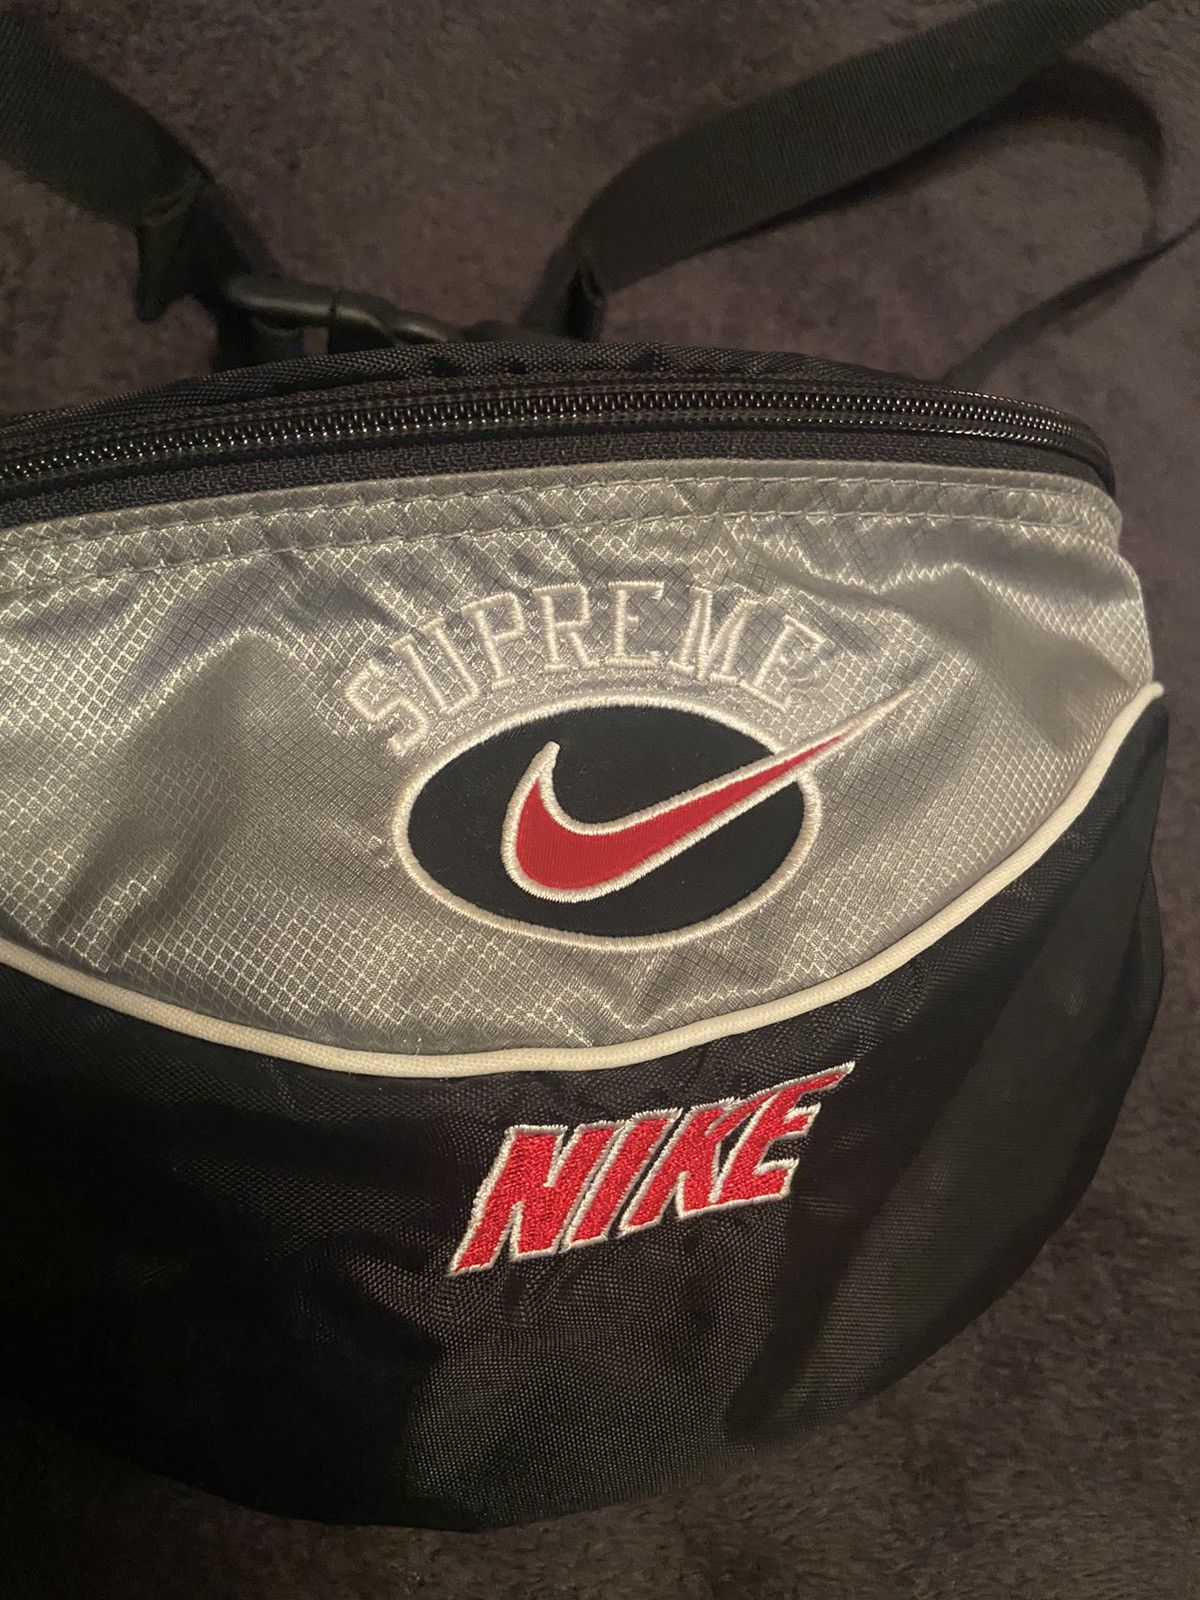 Supreme Nike x Supreme silver Shoulder Bag | Grailed